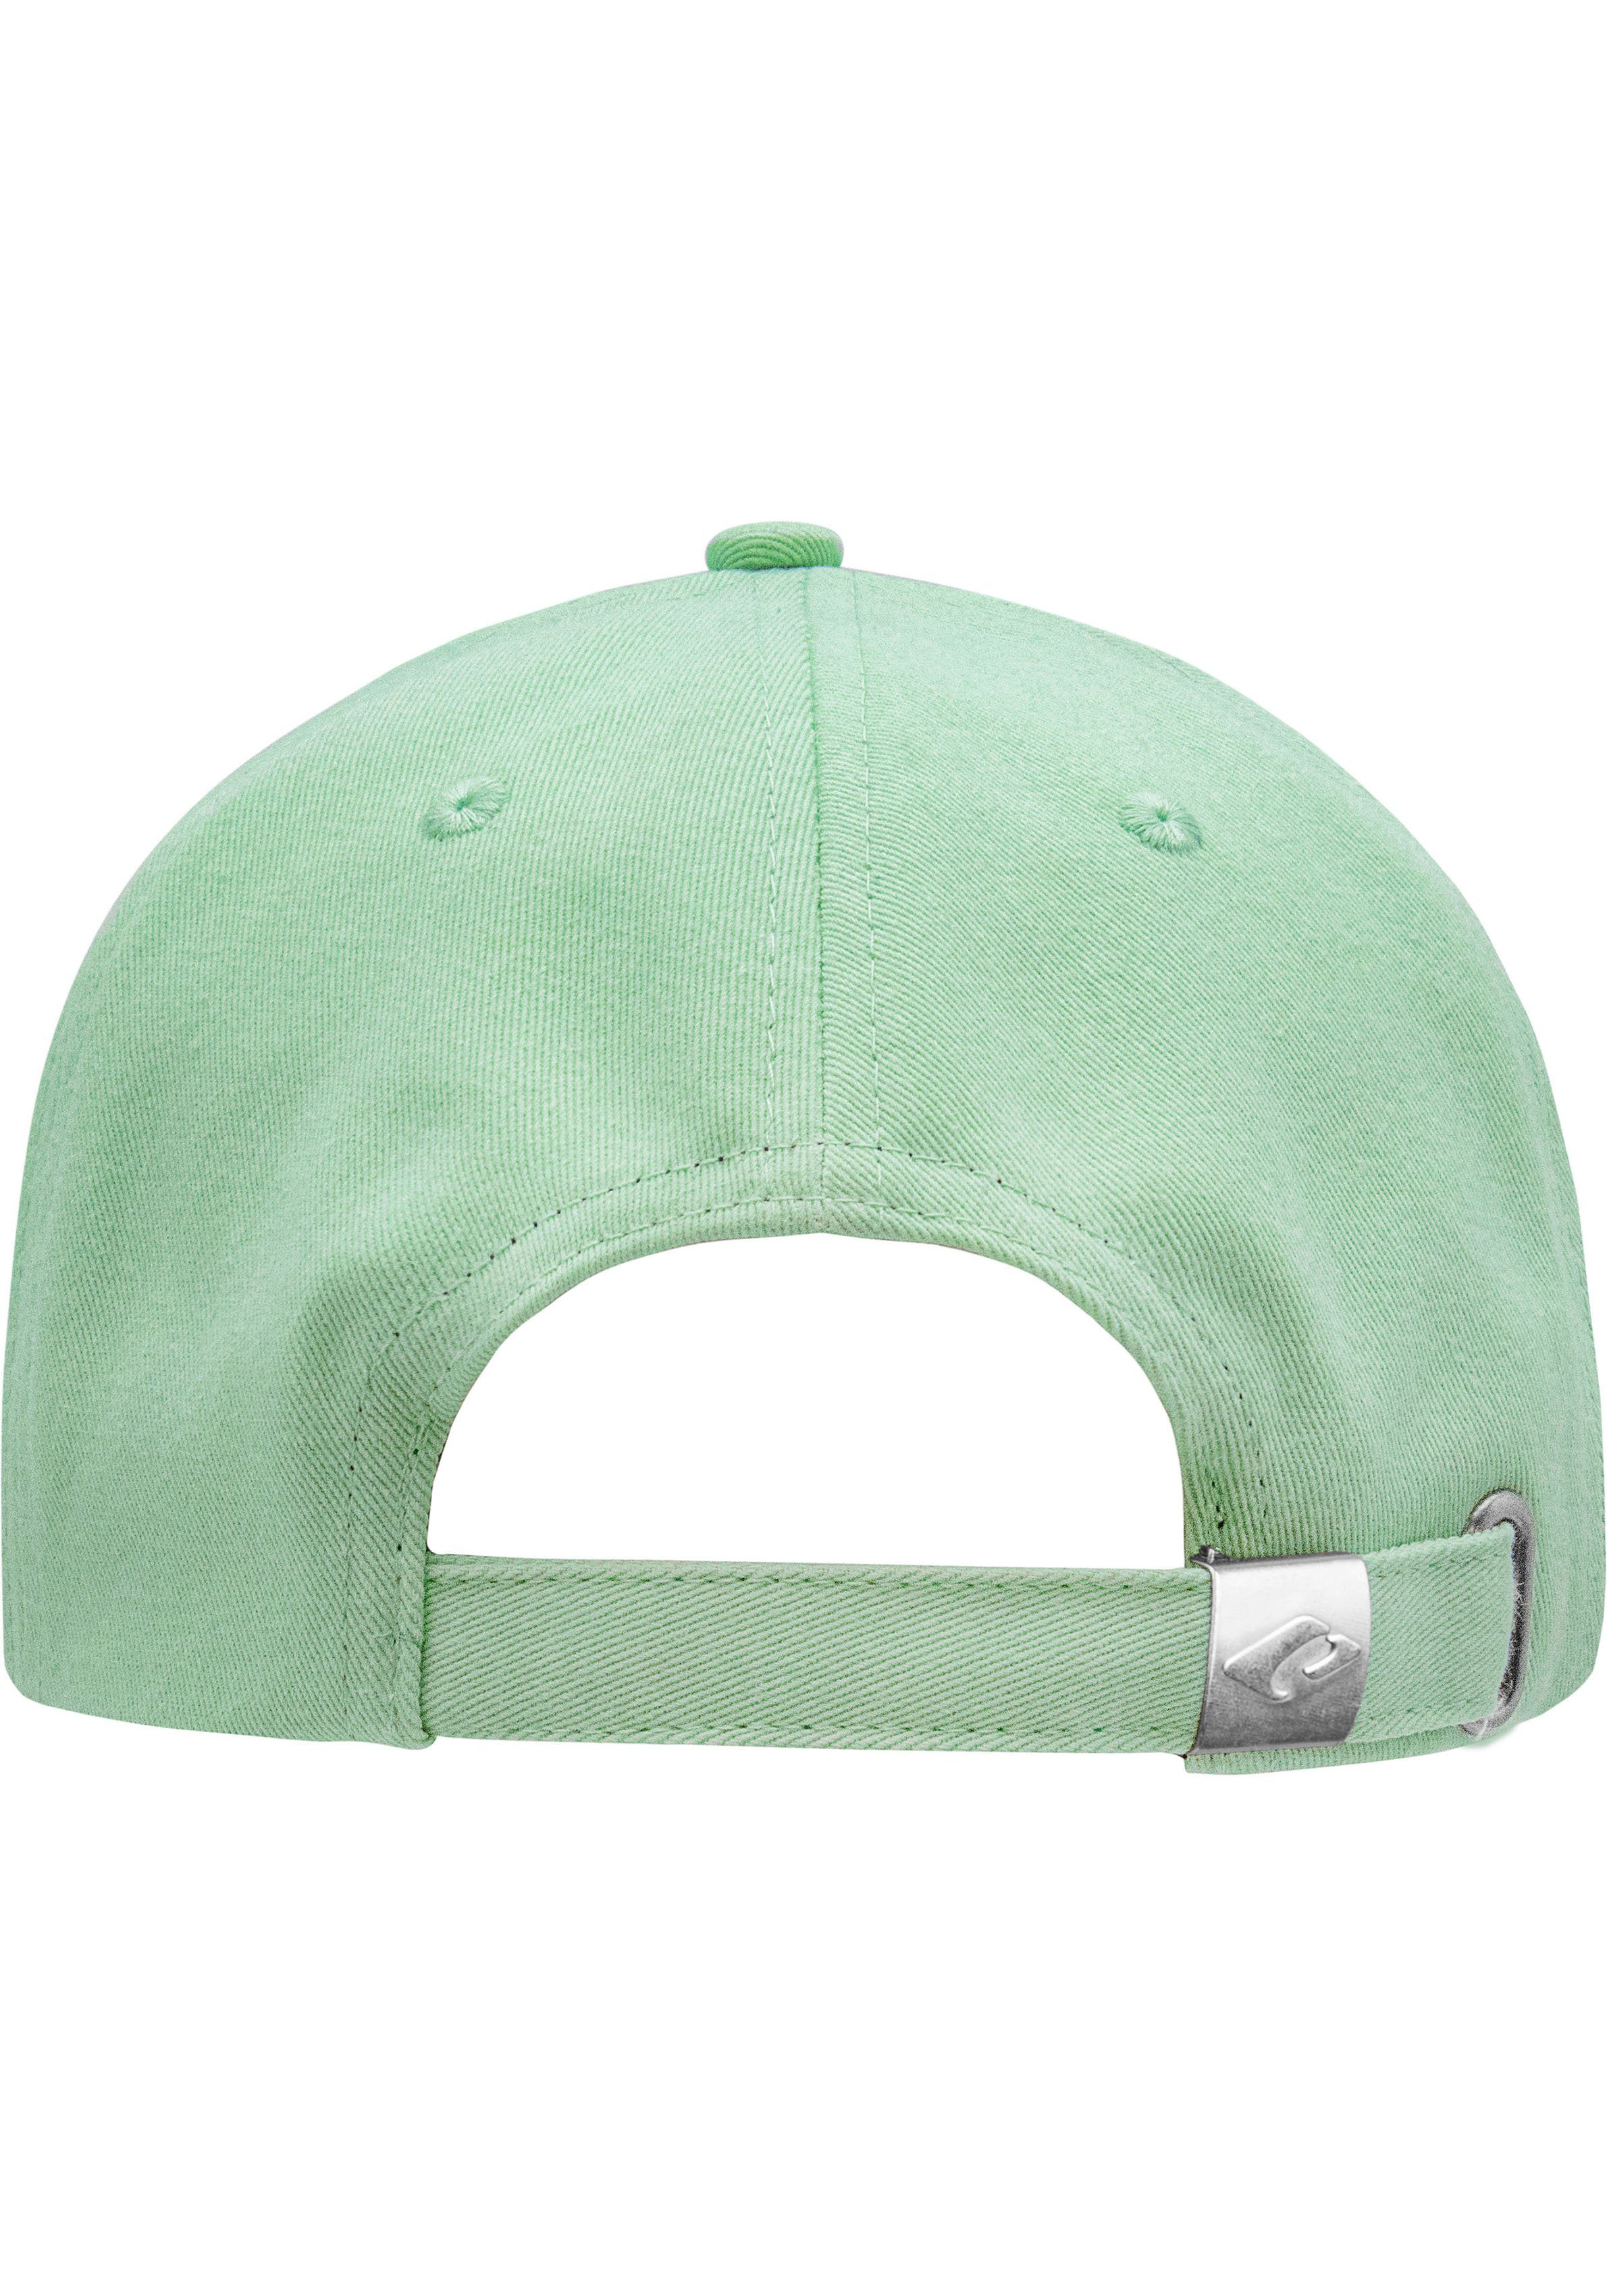 chillouts Baseball Cap Arklow Hat mint